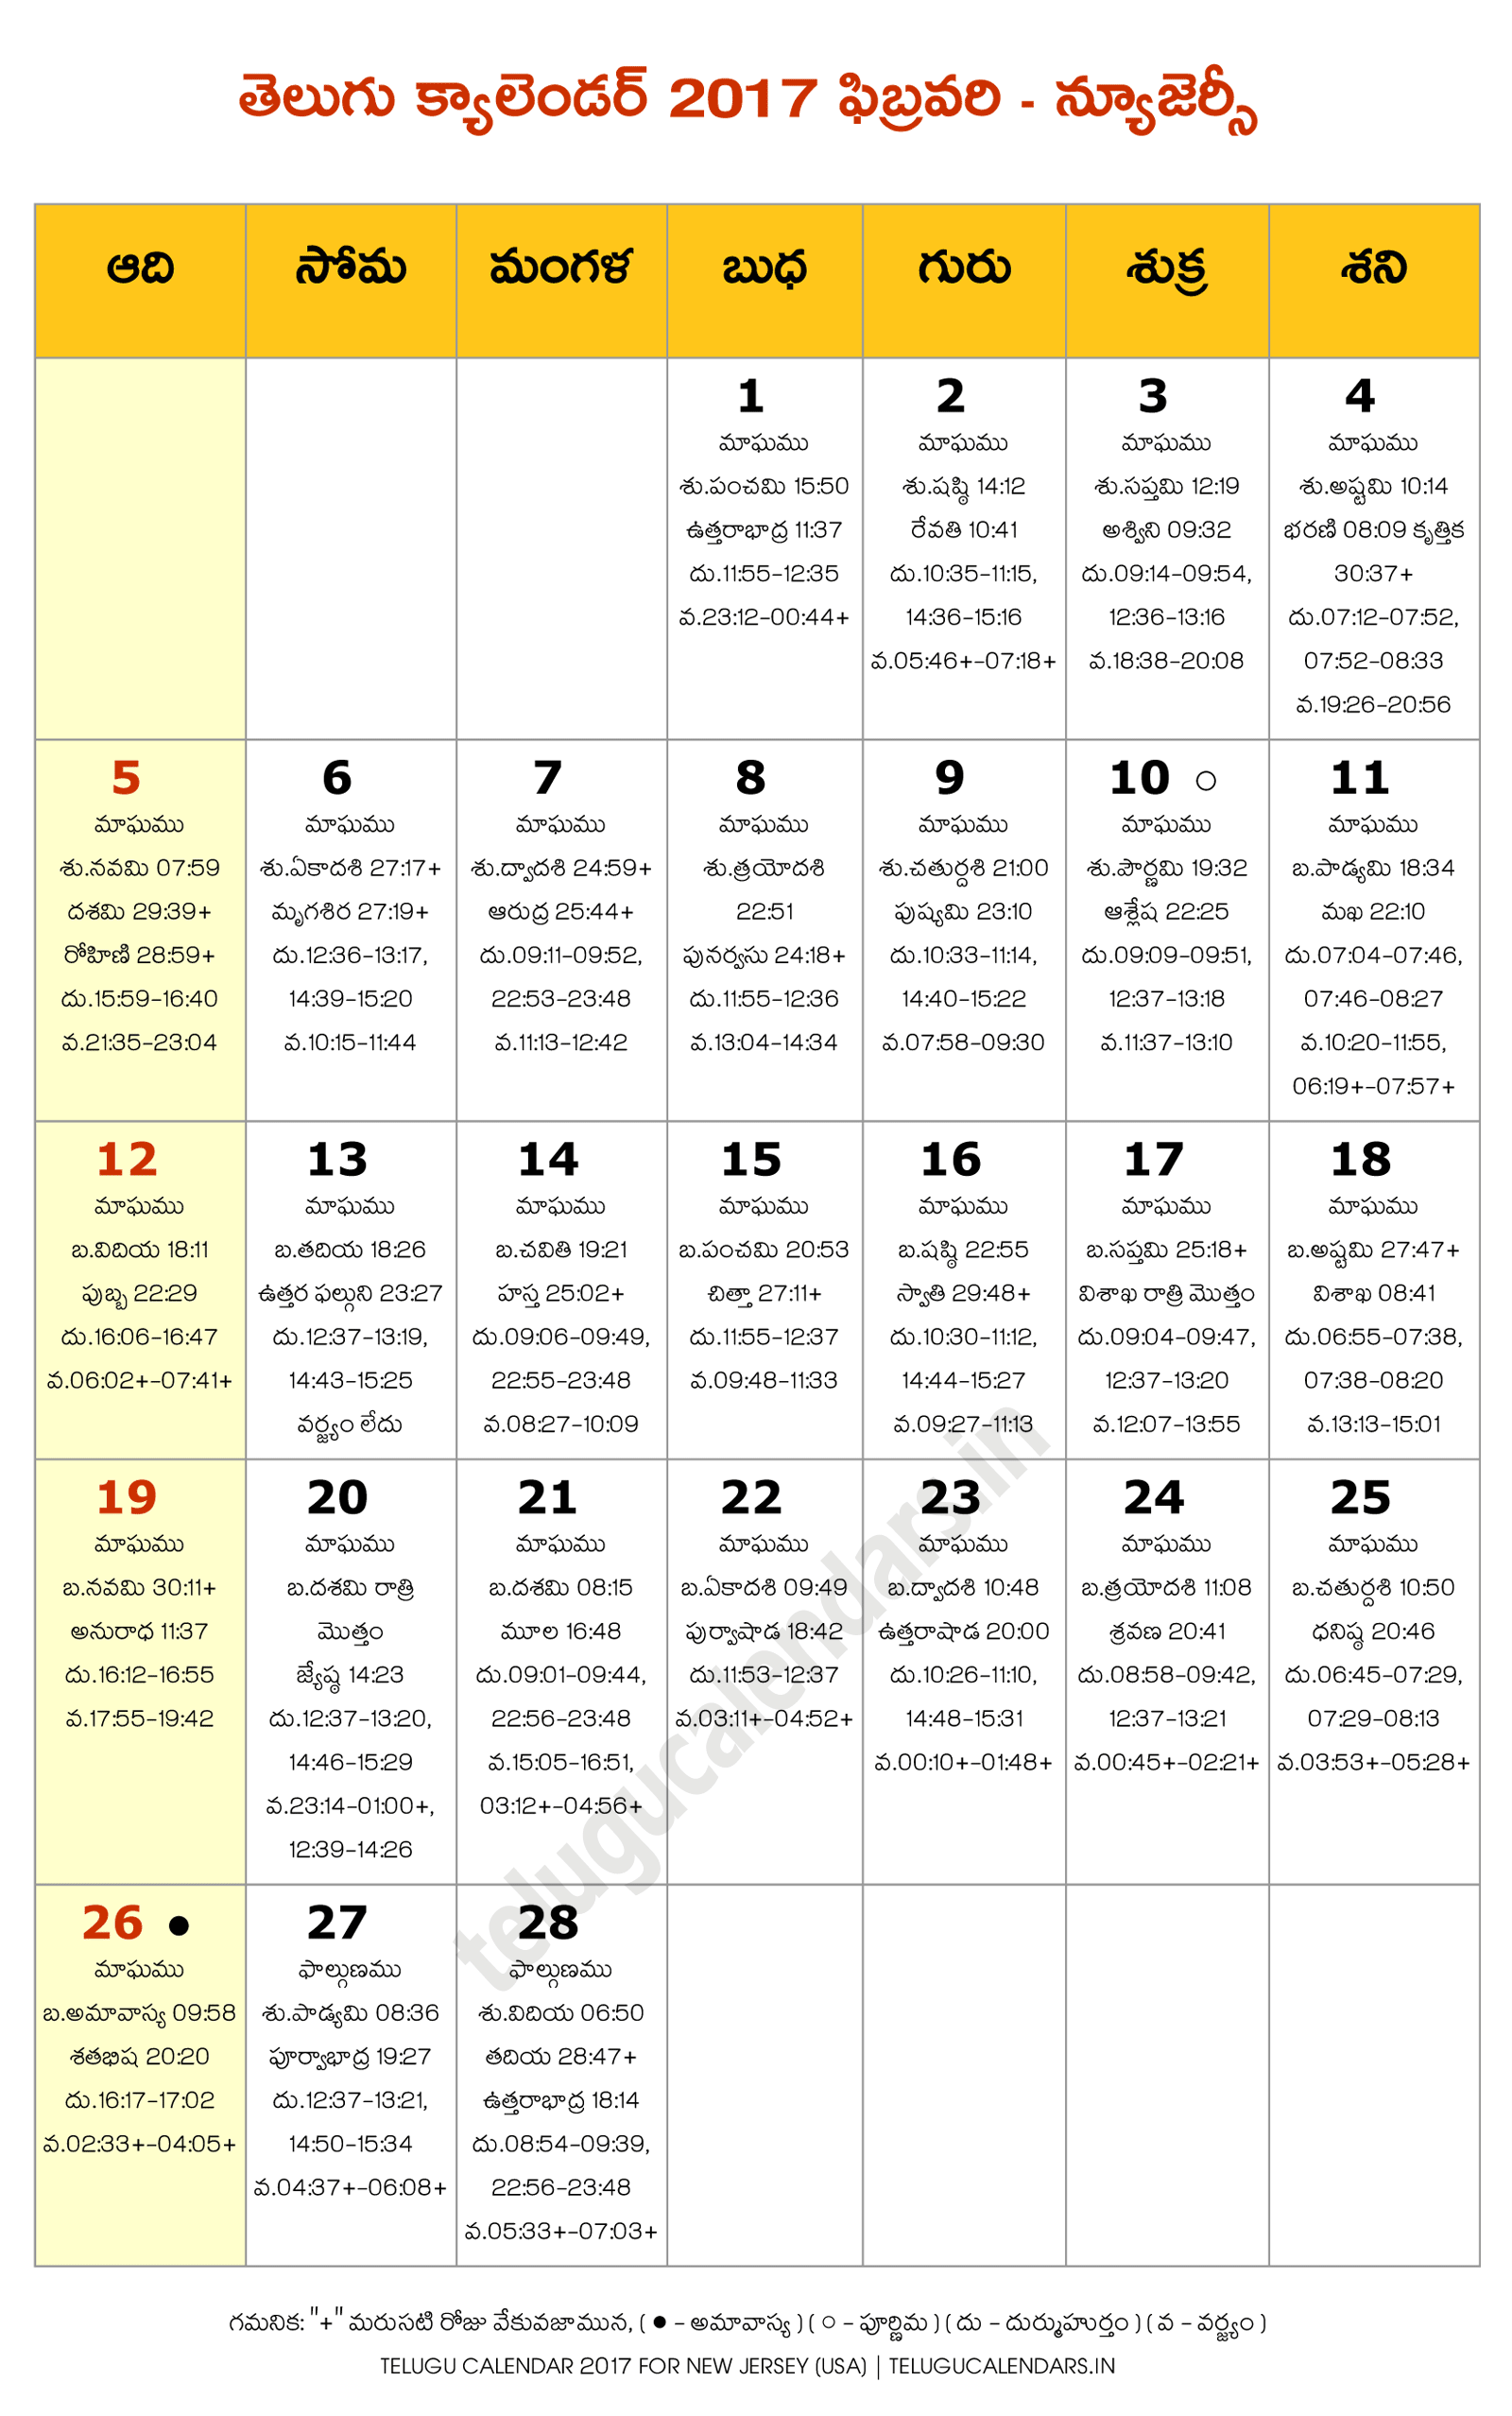 New Jersey 2017 February Telugu Calendar | Telugu Calendars